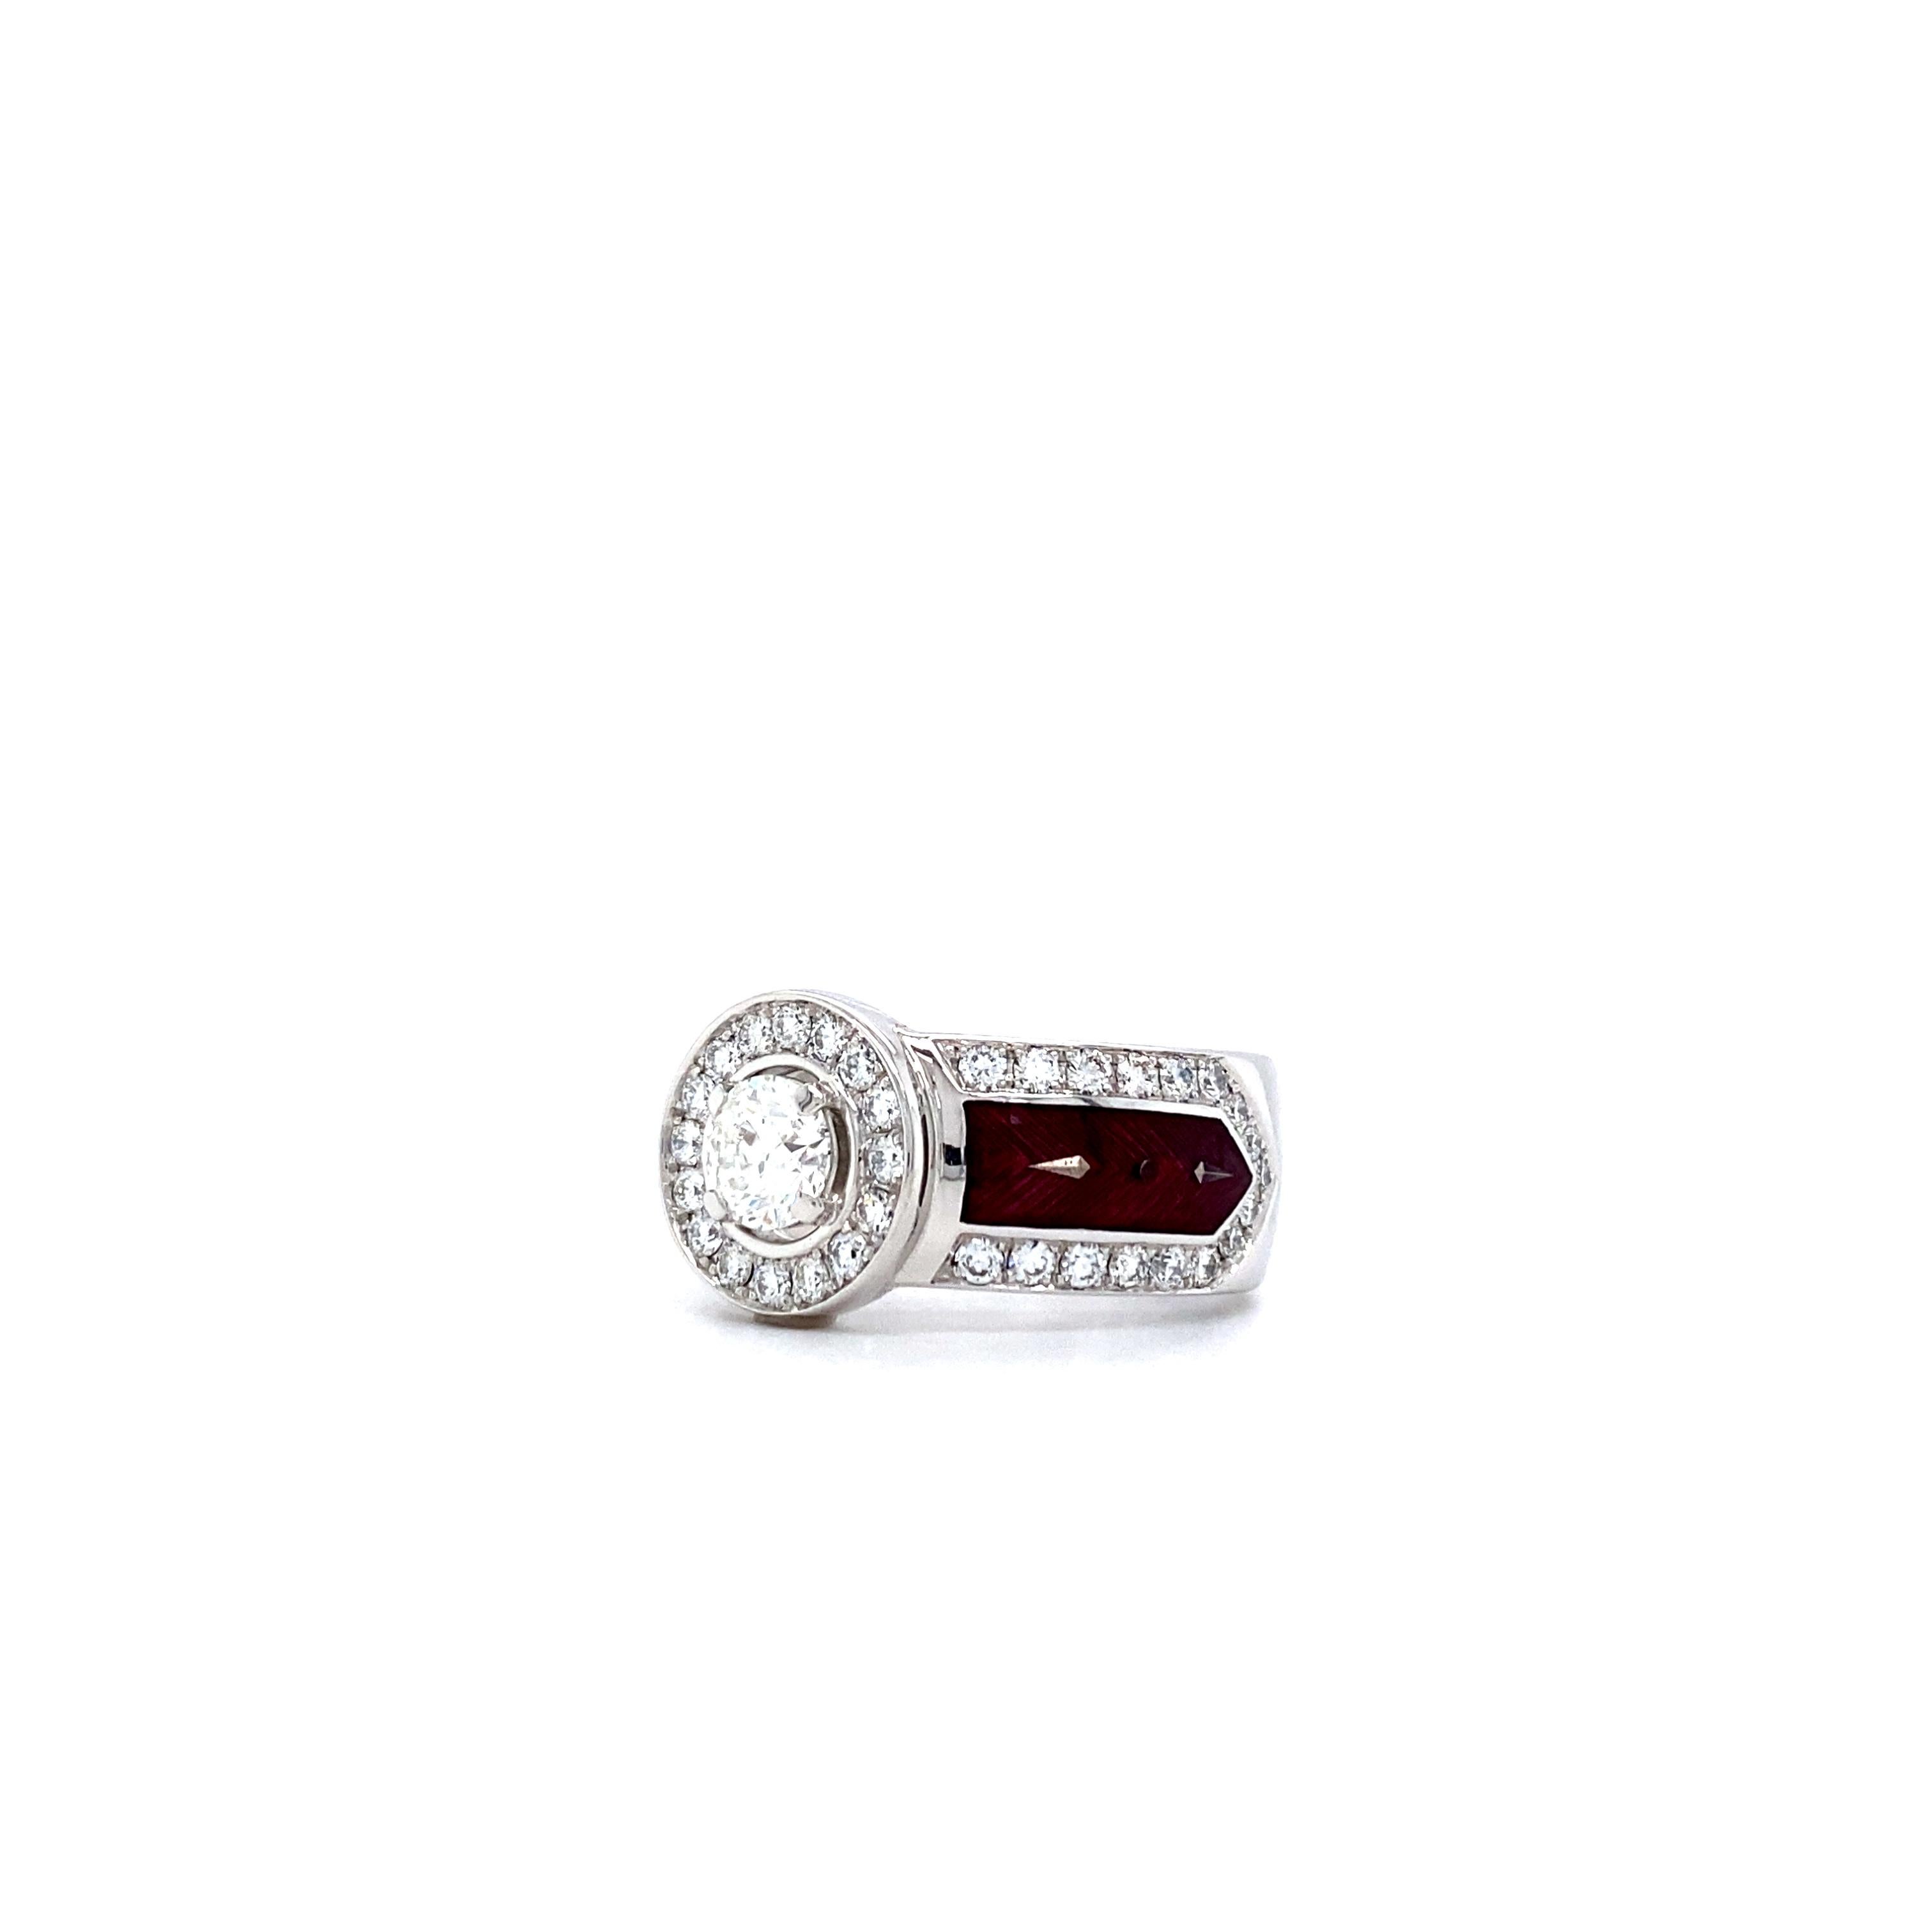 Victor Mayer Ring Red Vitreous Enamel 18k White Gold 51 Diamonds 1.20 ct For Sale 3